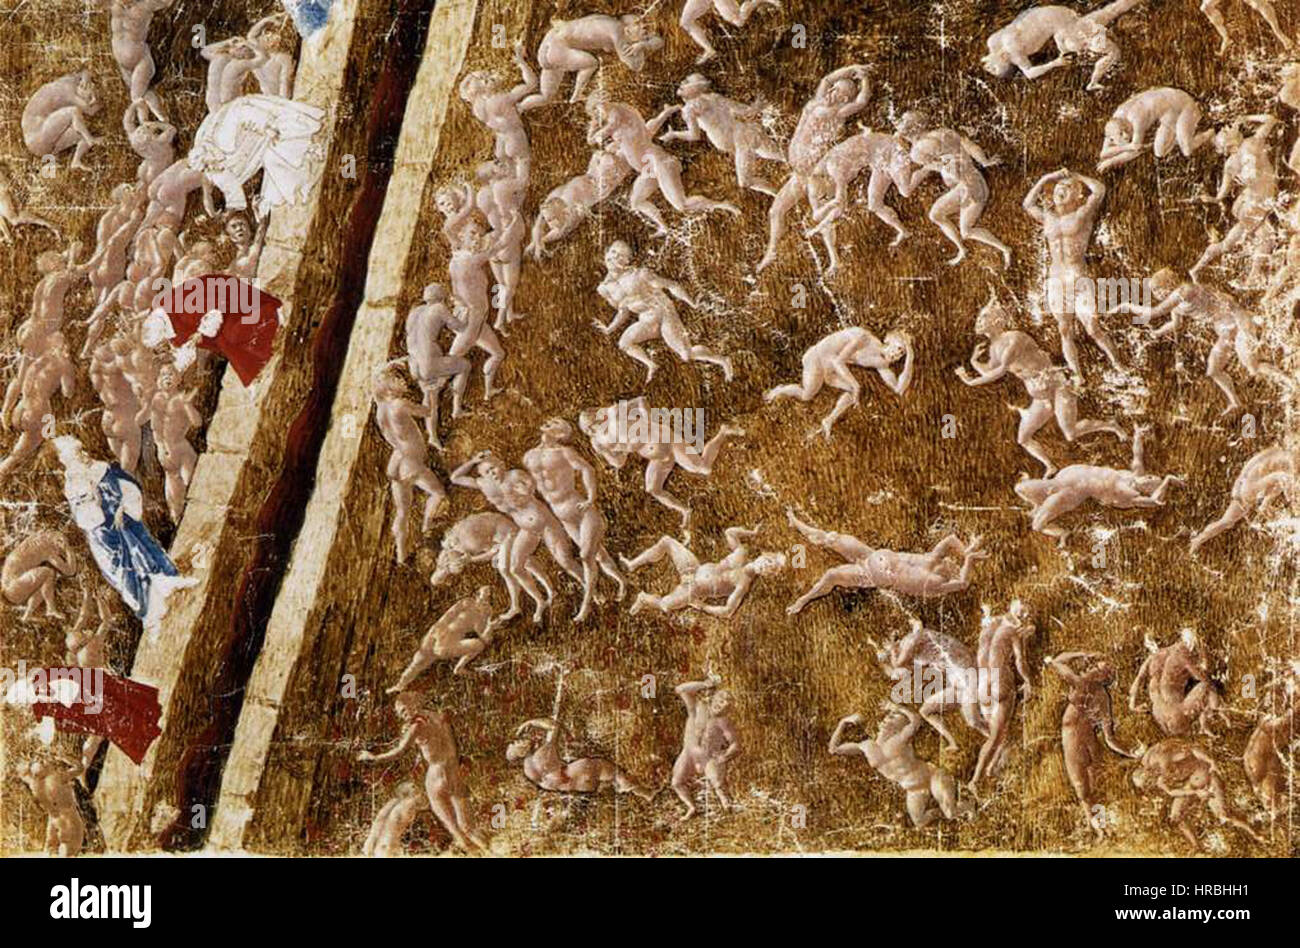 Sandro Botticelli - Illustration, die göttliche Komödie (Inferno) -  WGA02858 Stockfotografie - Alamy